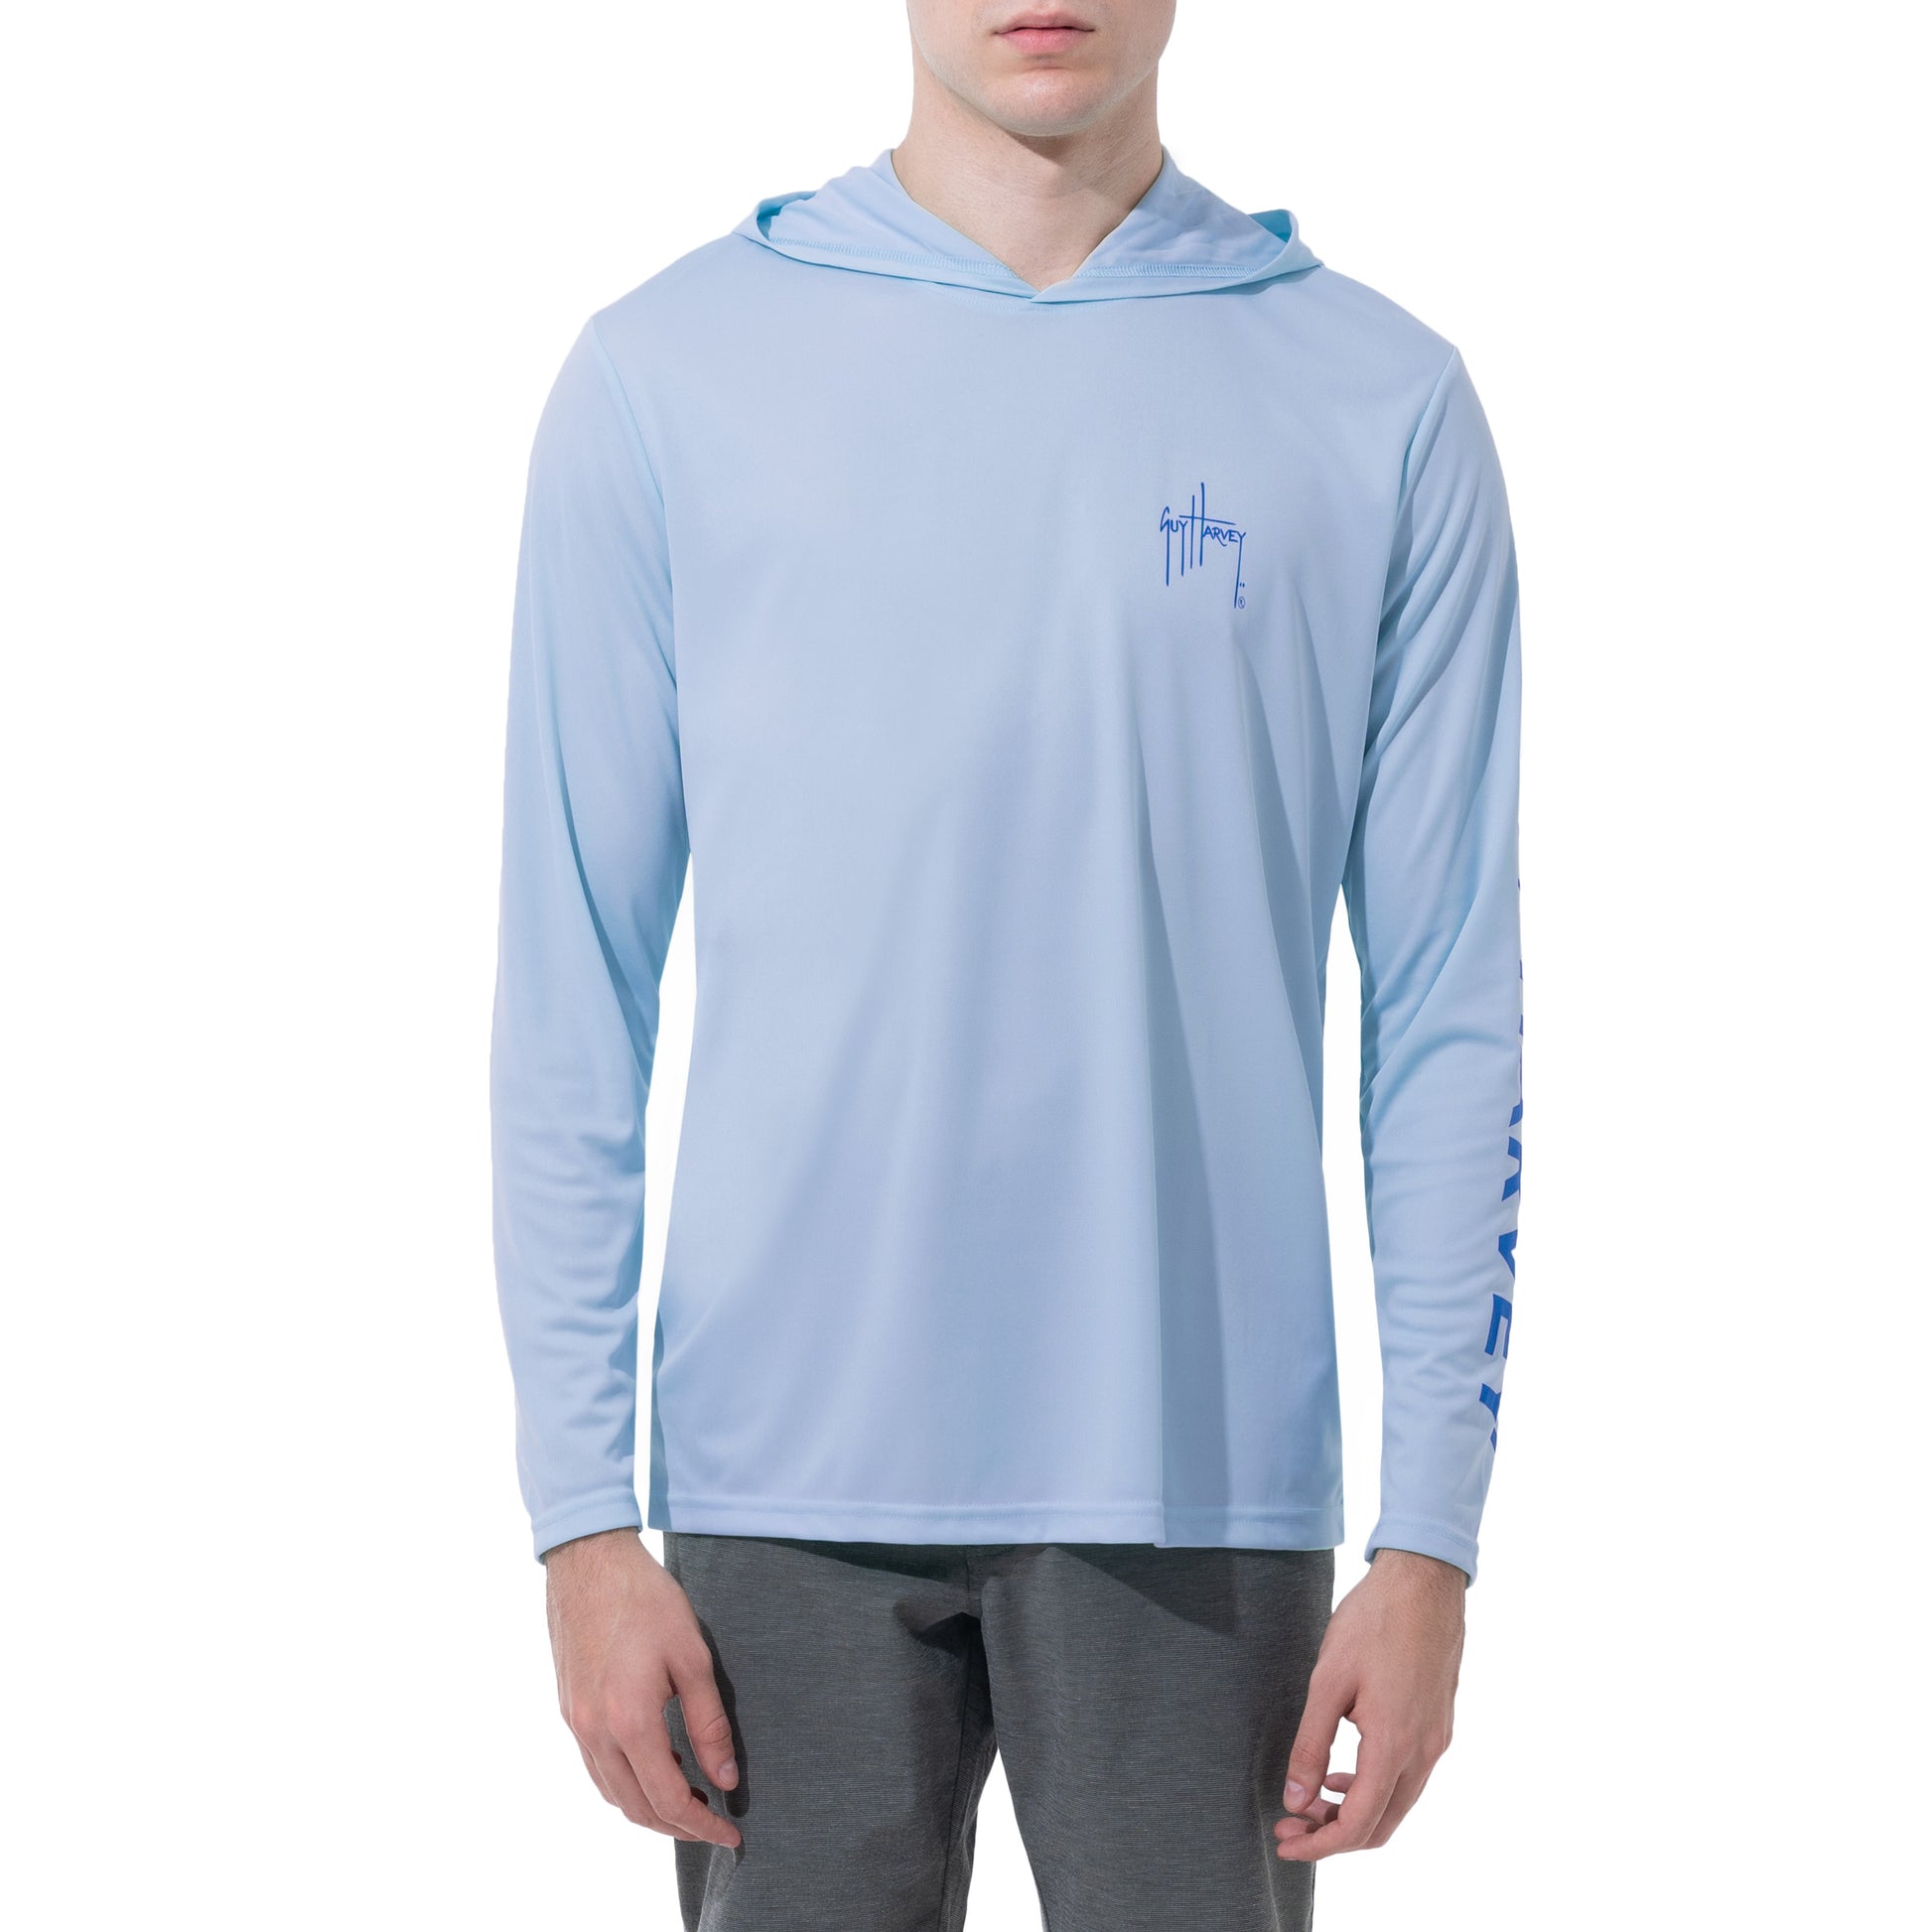 【Buy 4 Get 4th Free】Men's Long Sleeve Hooded Shirt UPF 50+ Athletic Shirts, Blue Grey / XXL